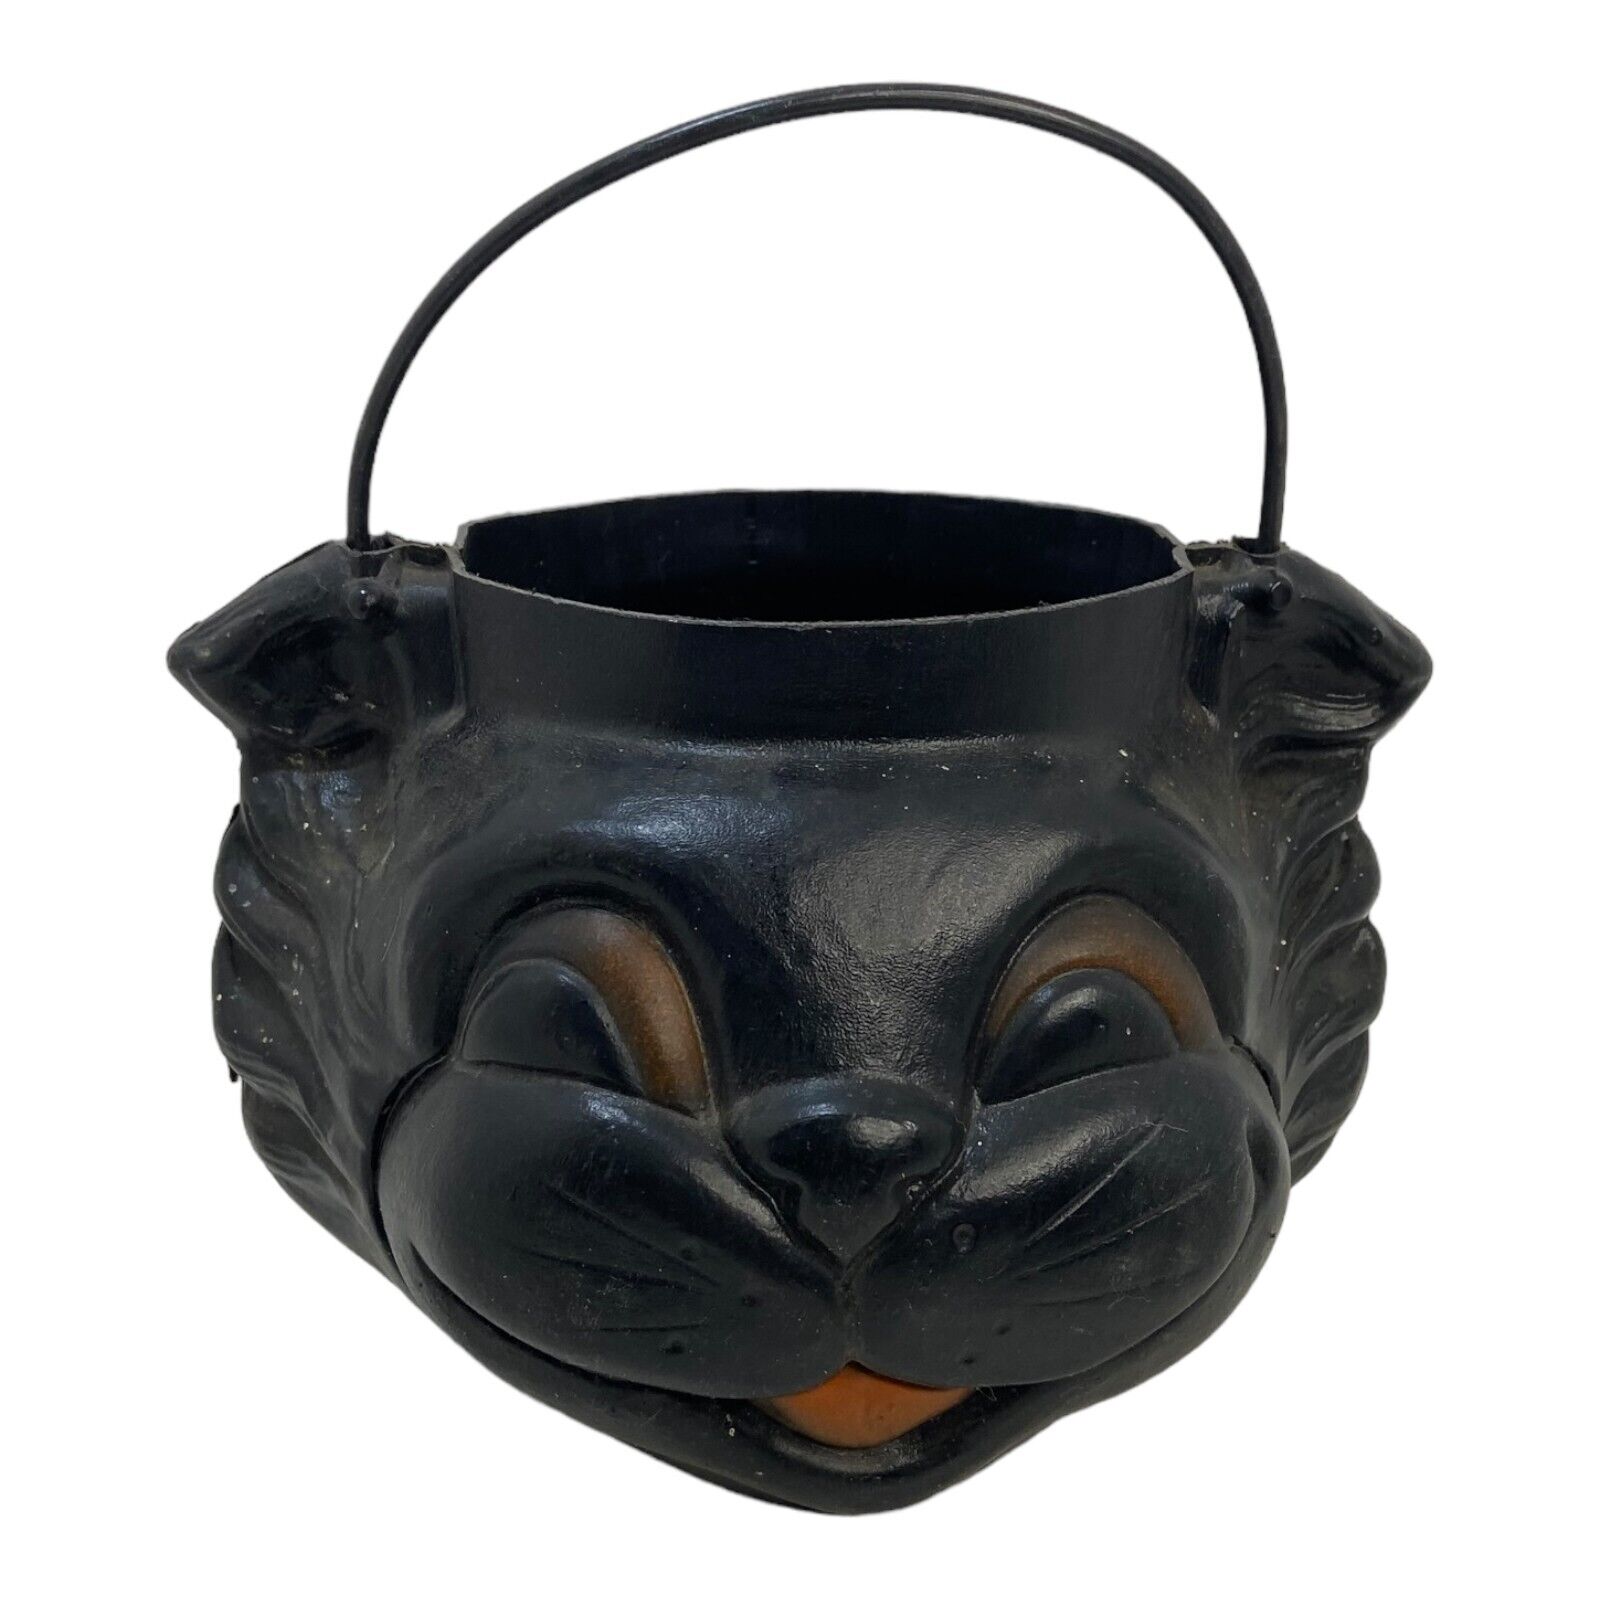 🐞 Vintage 1993 Empire Black Cat Blow Mold Halloween Trick or Treat Pail Bucket